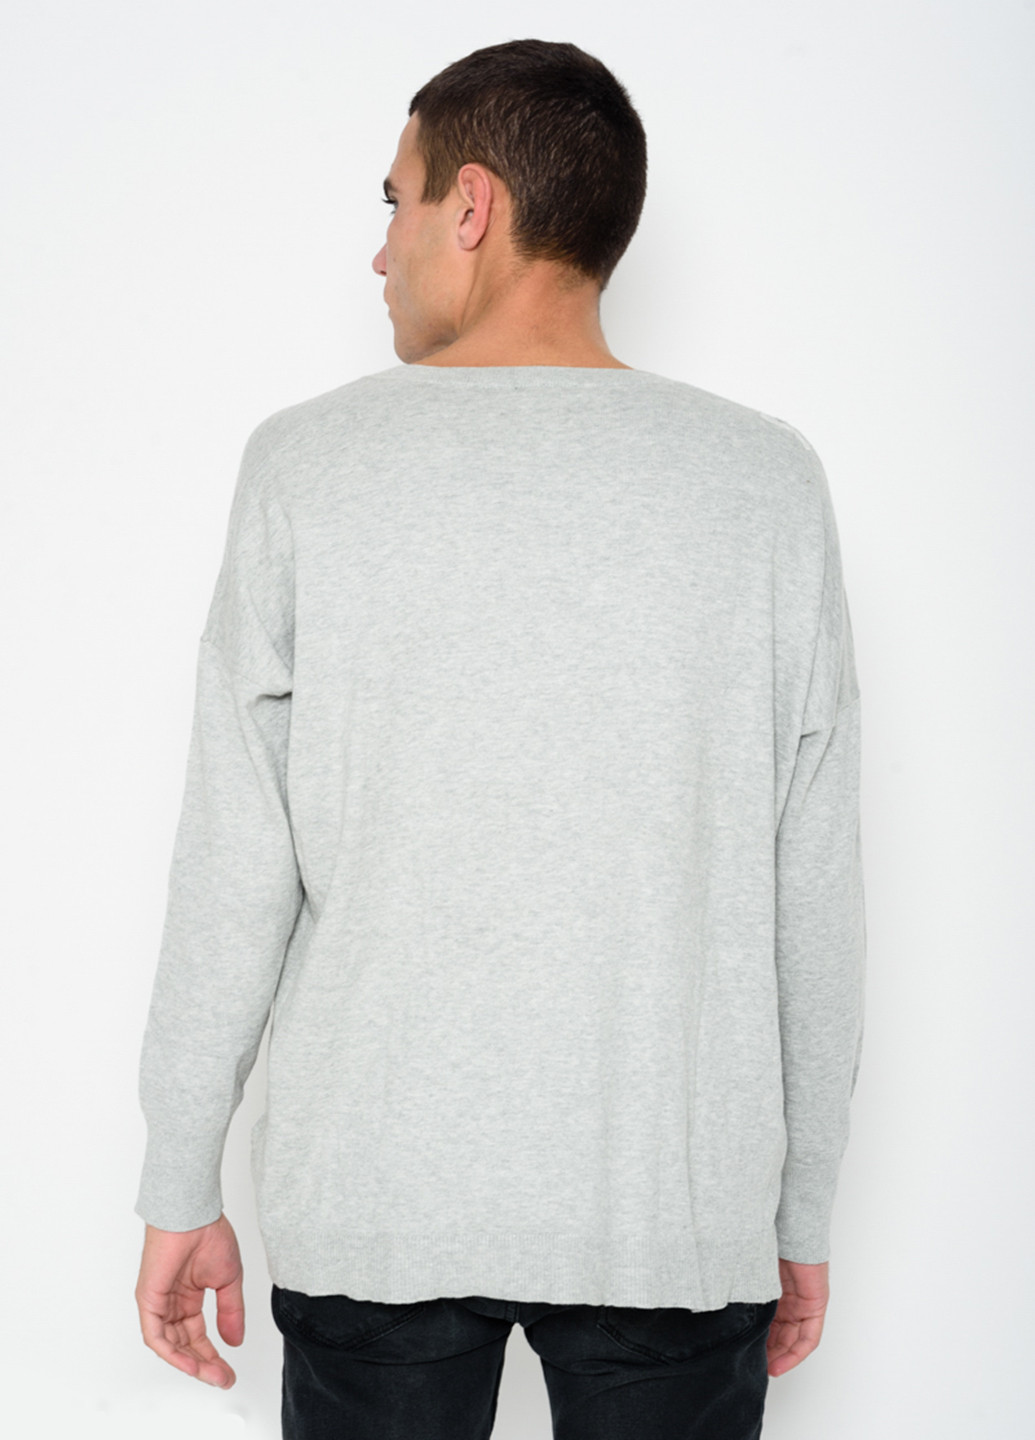 Светло-серый демисезонный пуловер пуловер Issa